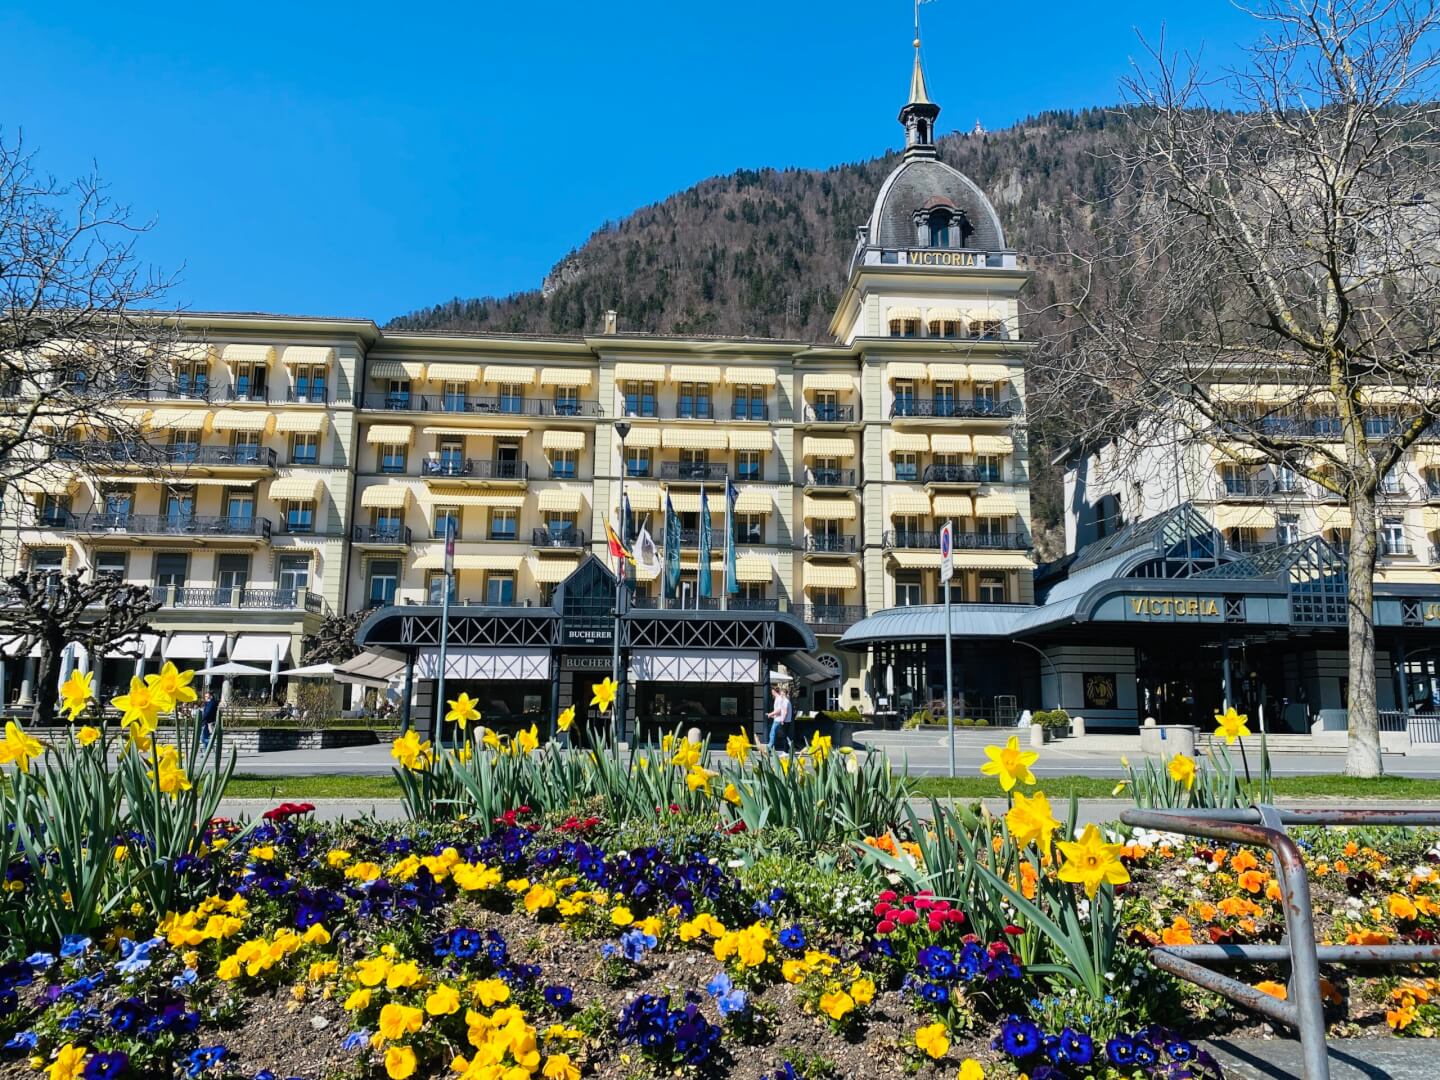 Victoria Jungfrau Grand Hotel & Spa, Interlaken: Where Luxury Meets Adventure